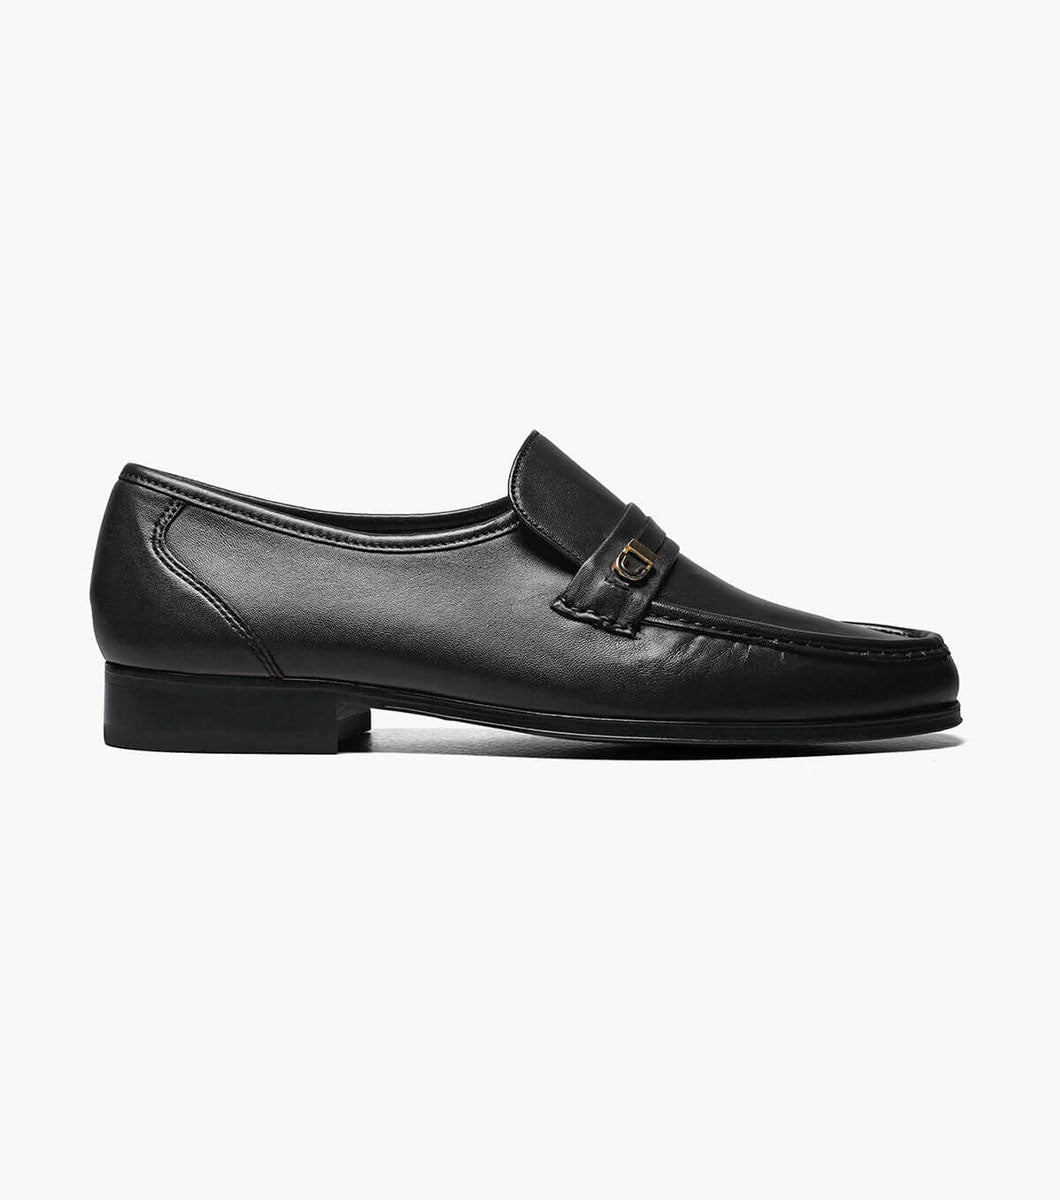 FLORSHEIM Imperial Como Moc Toe Bit Loafer - Black (Size 11D) *New with No Box*